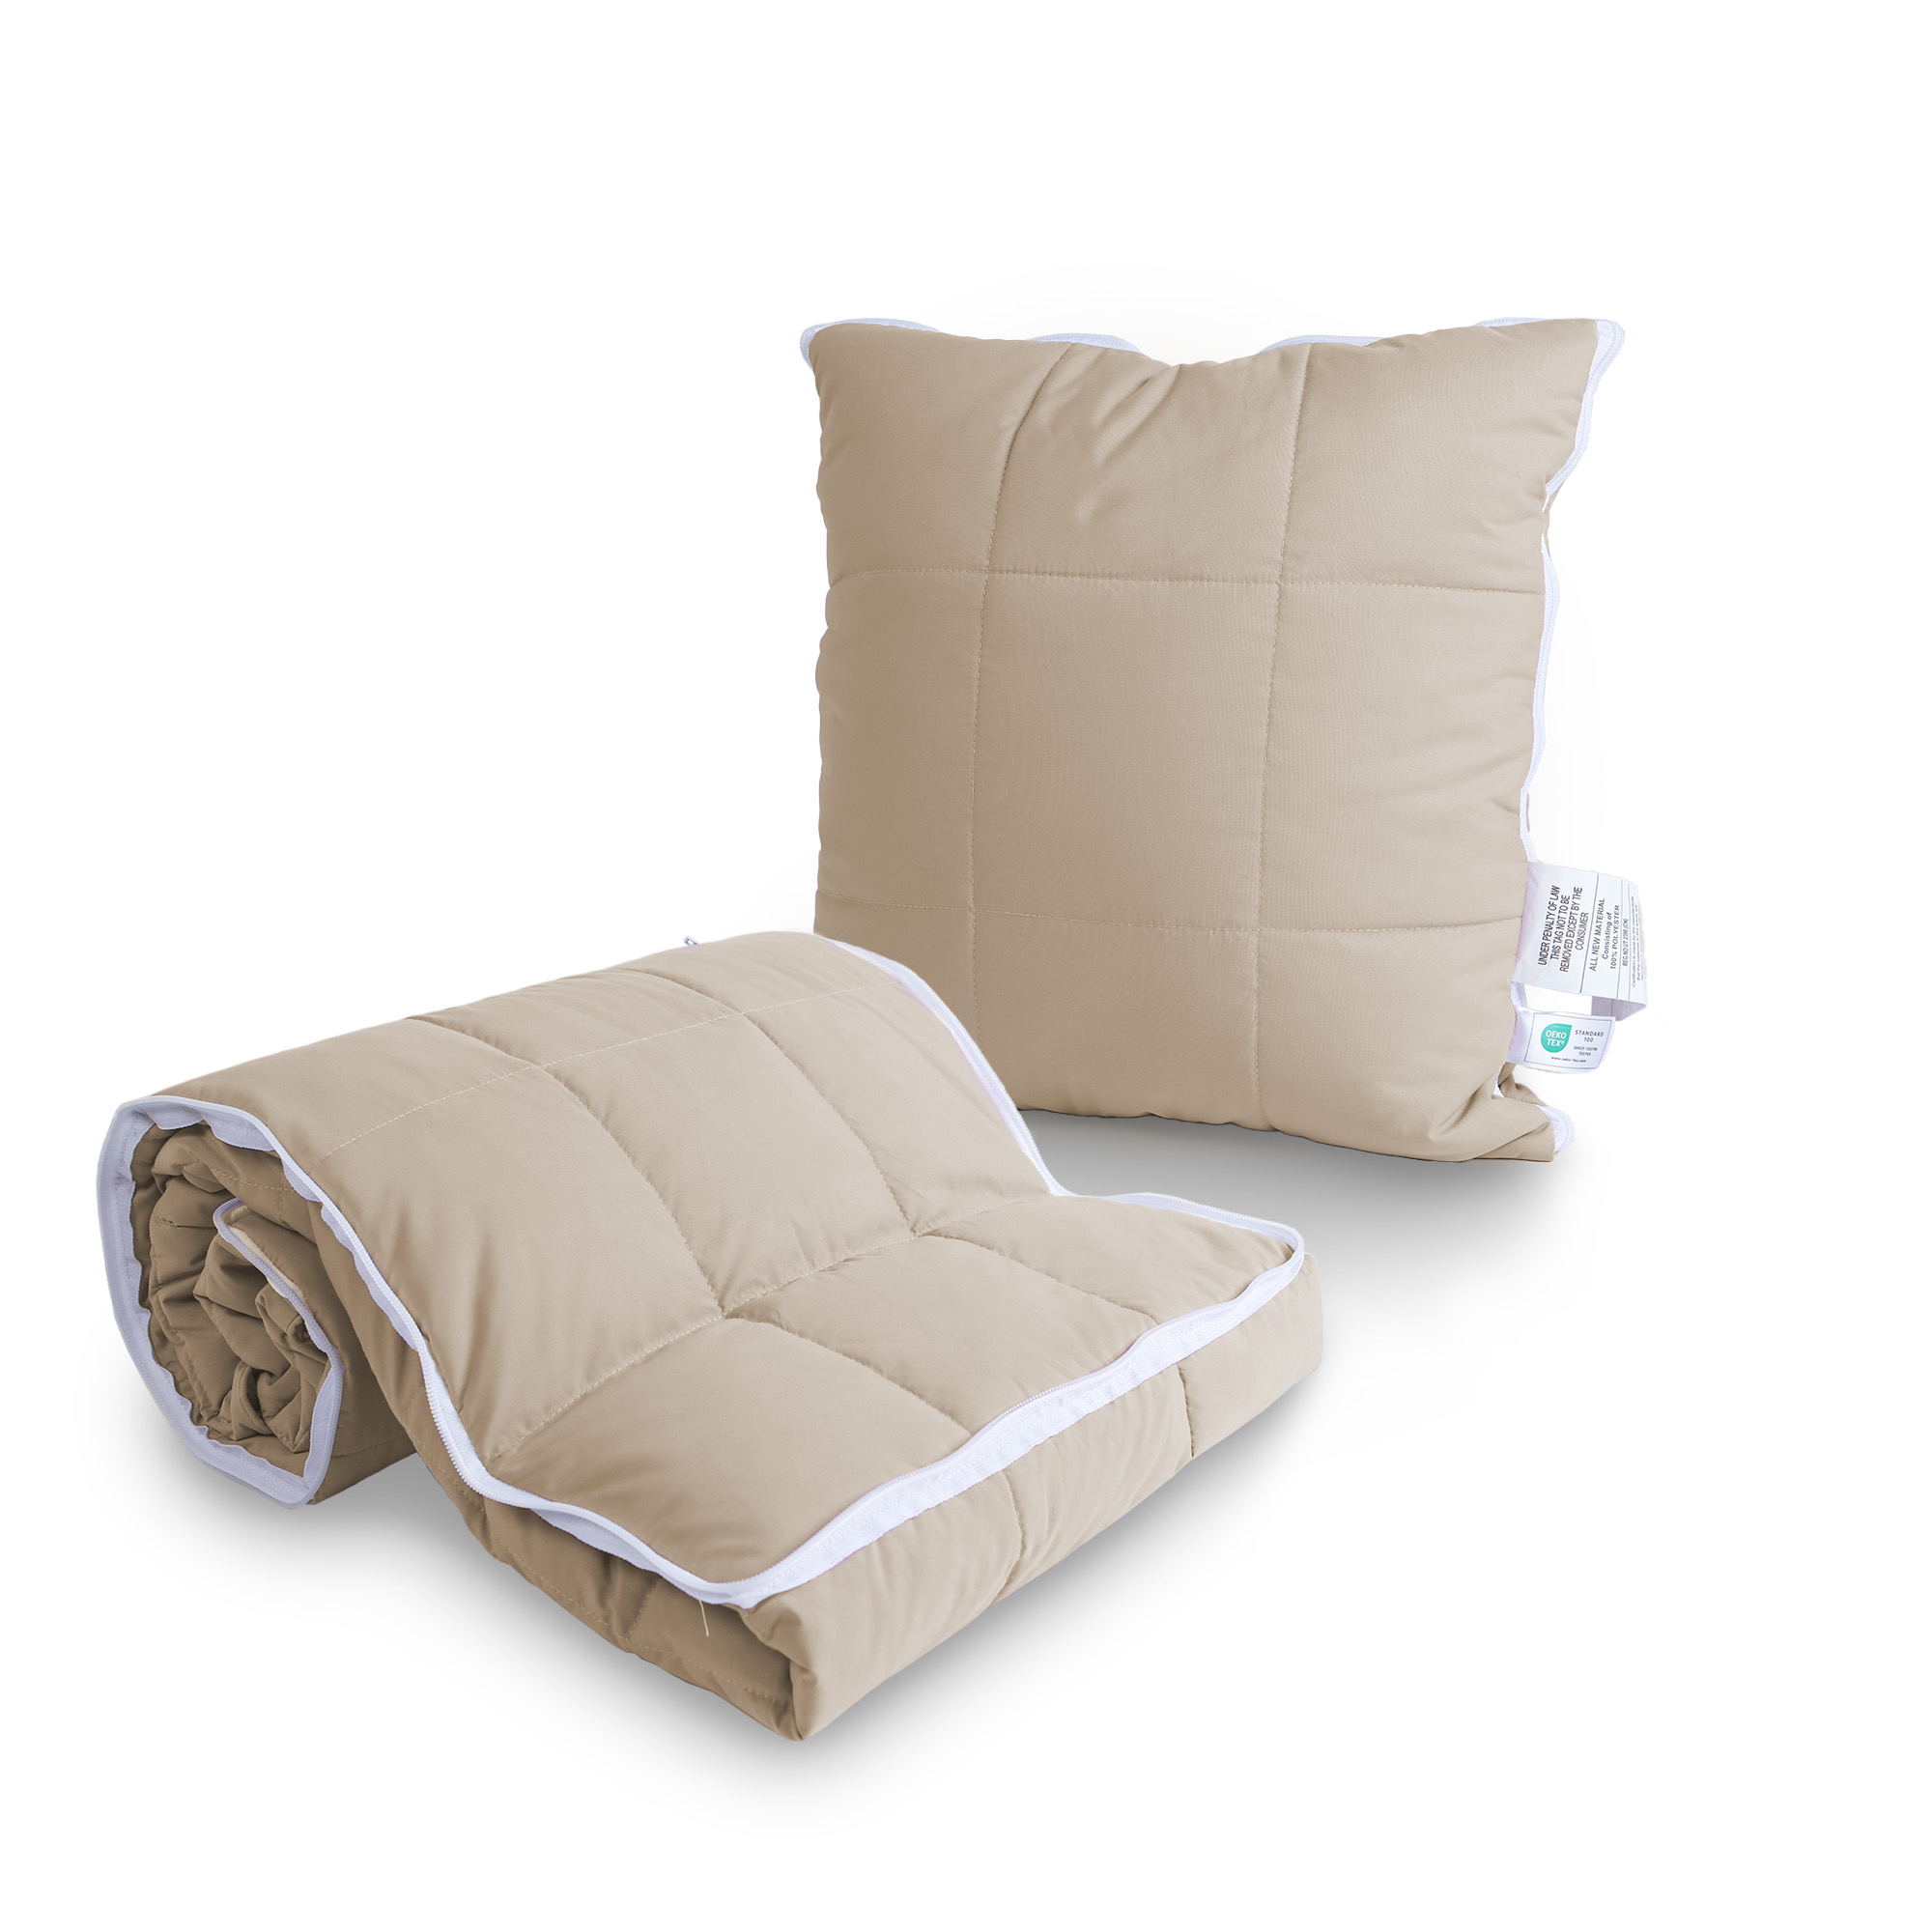 Lightweight Packable Ultra Soft Down Alternative Throw Blanket, 50W X 70L - Cozy And Portable, Zippered Design - Khaki, 50W X 70L